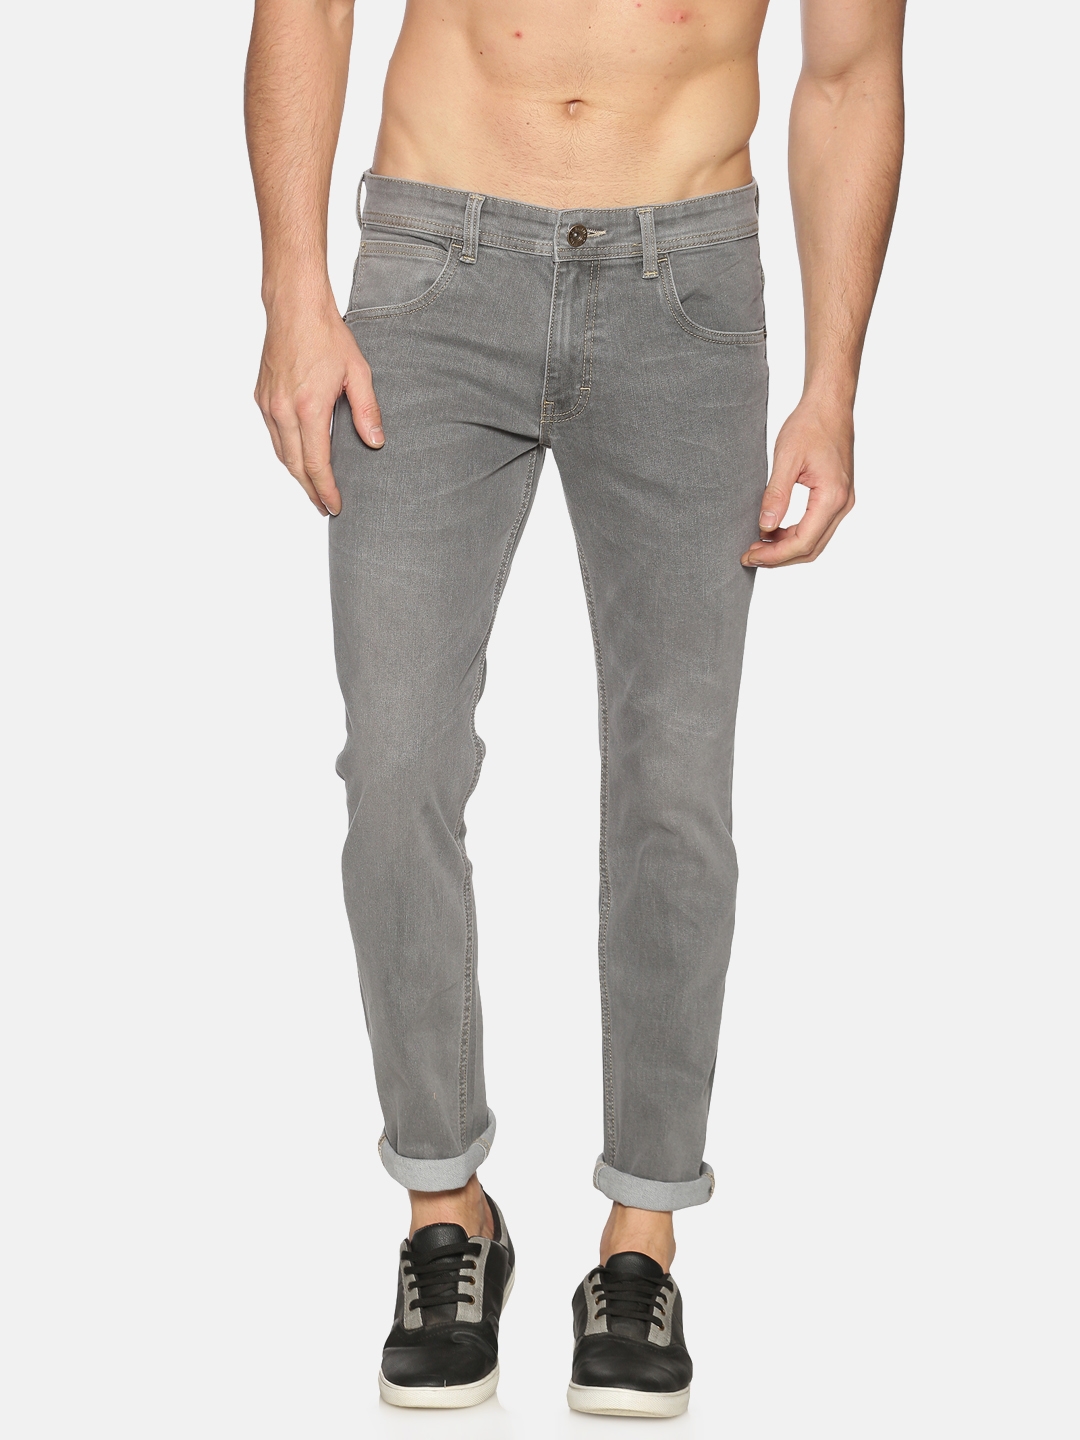 Chennis | Chennis Mens Cotton Slim Fit Casual Grey Jeans